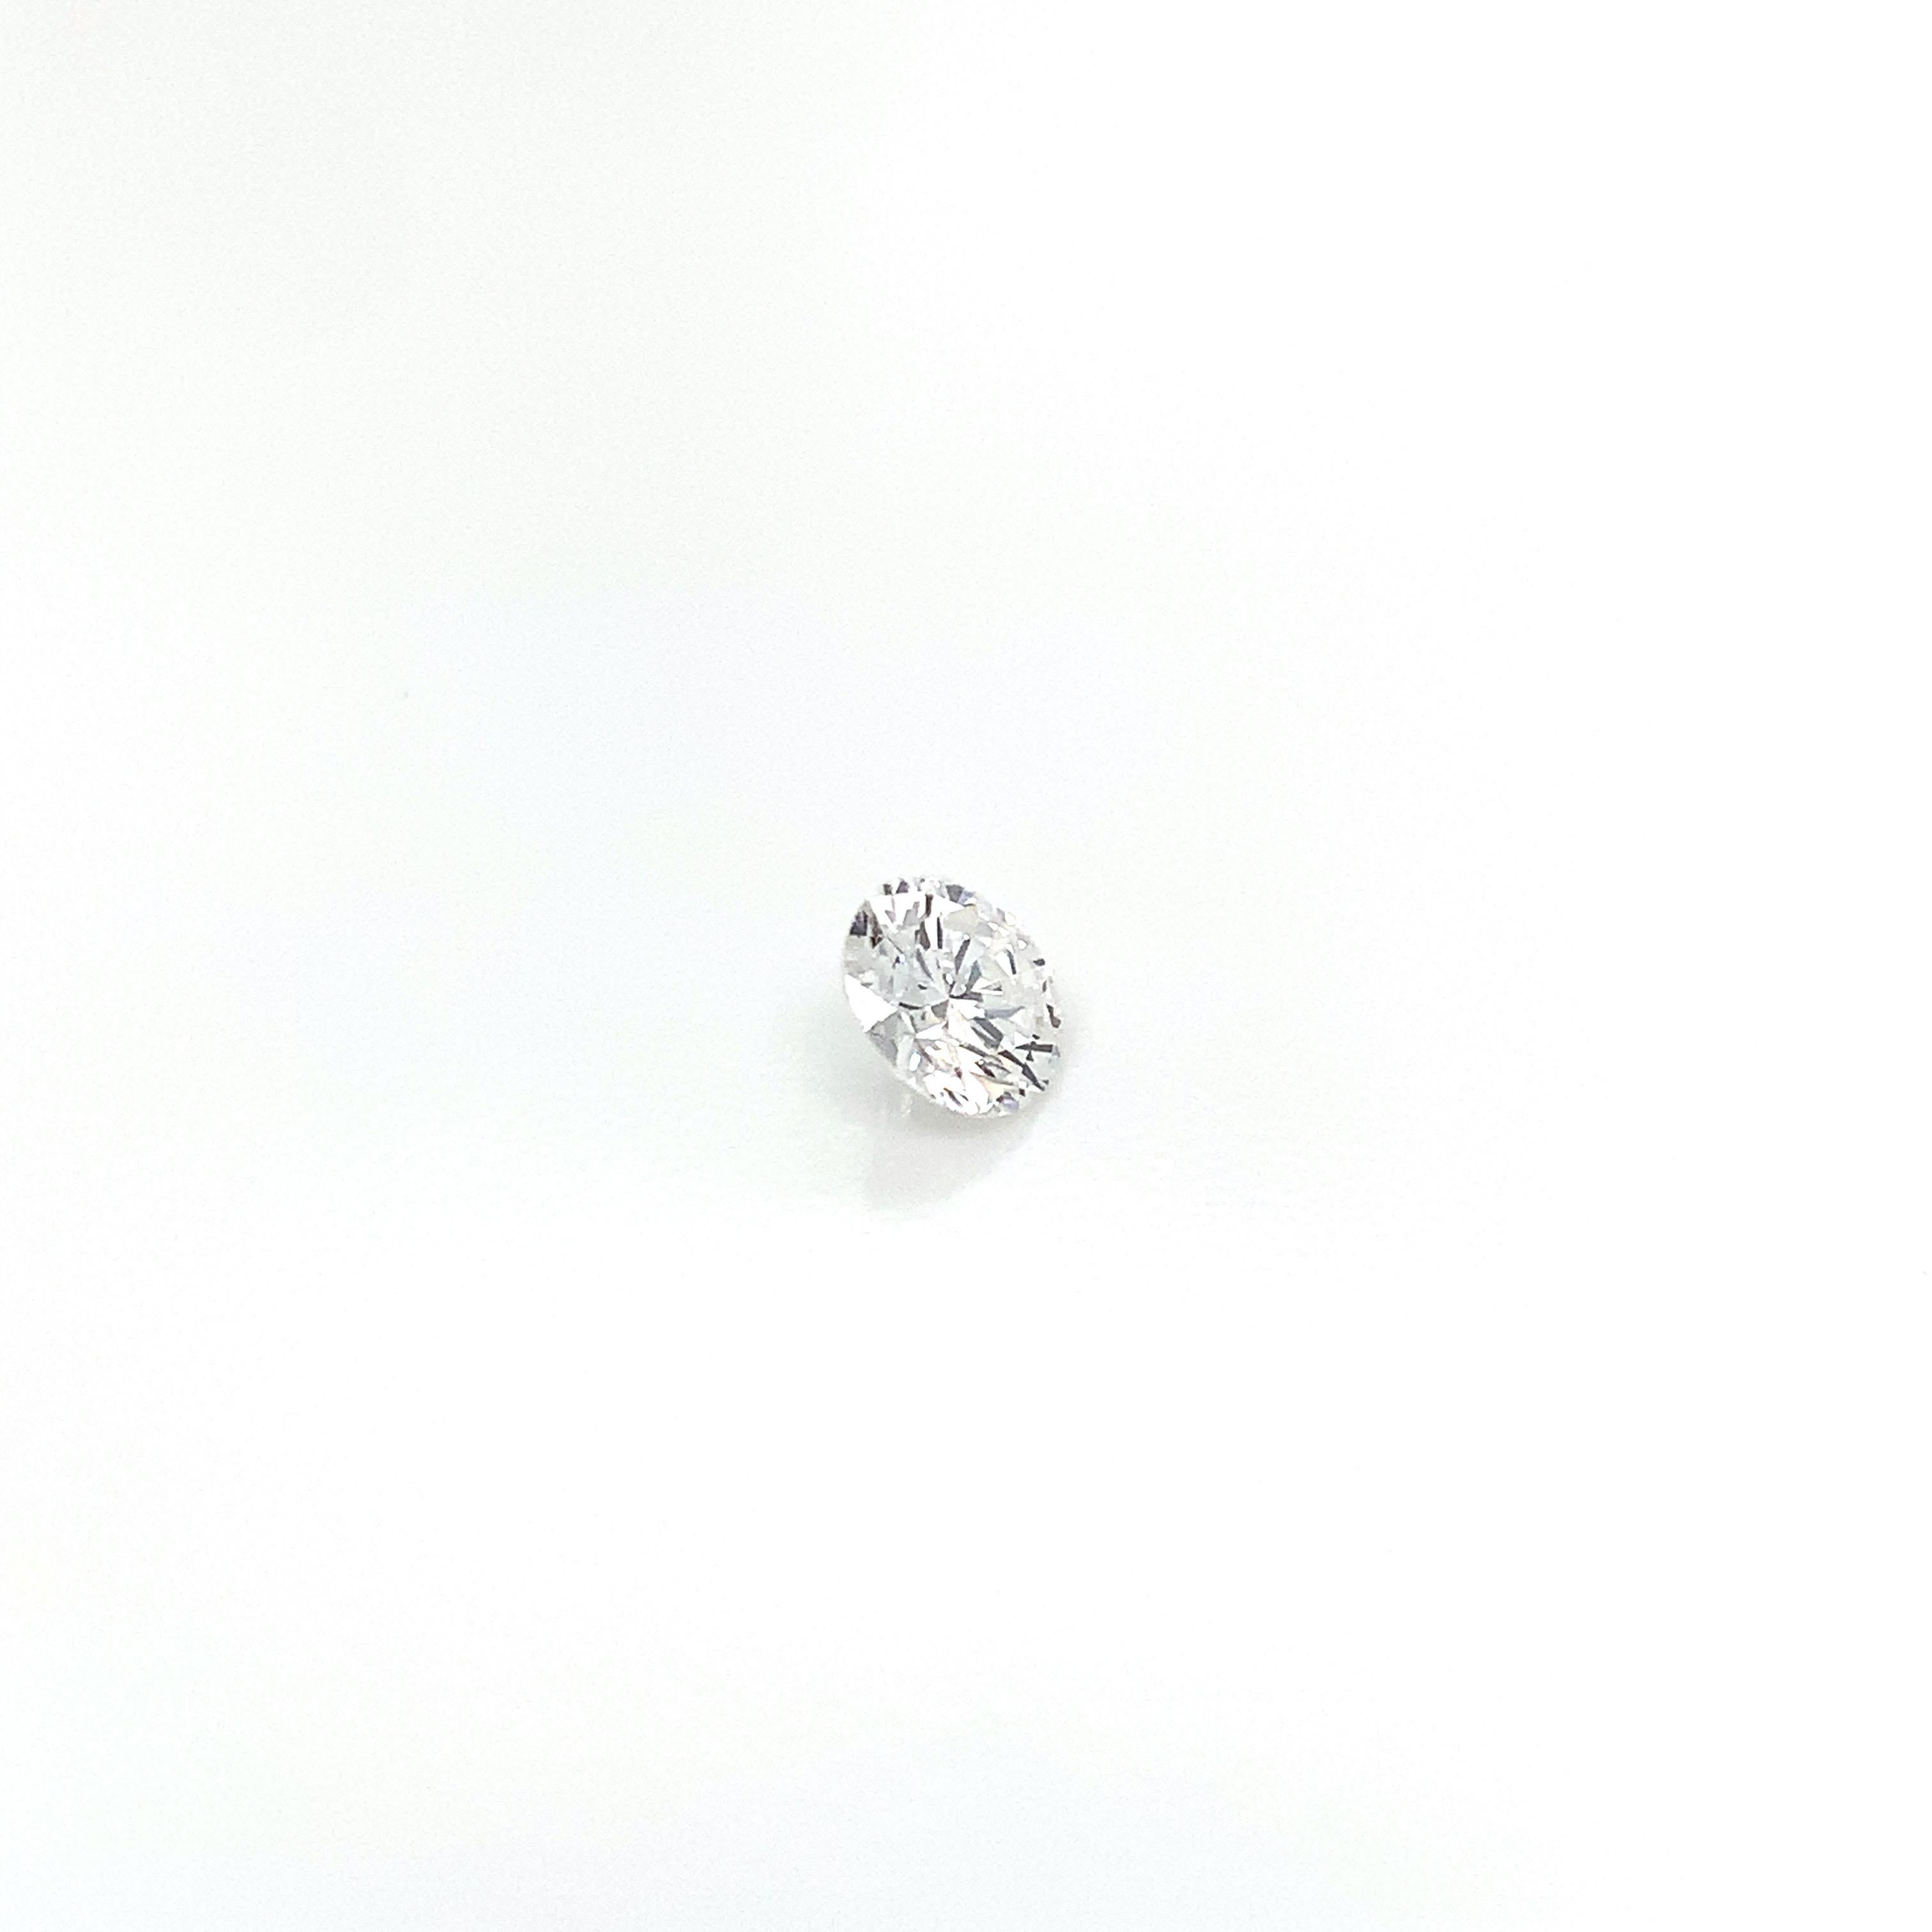 Round Cut GIA Certified 0.74 Carat Round Brilliant Diamond For Sale